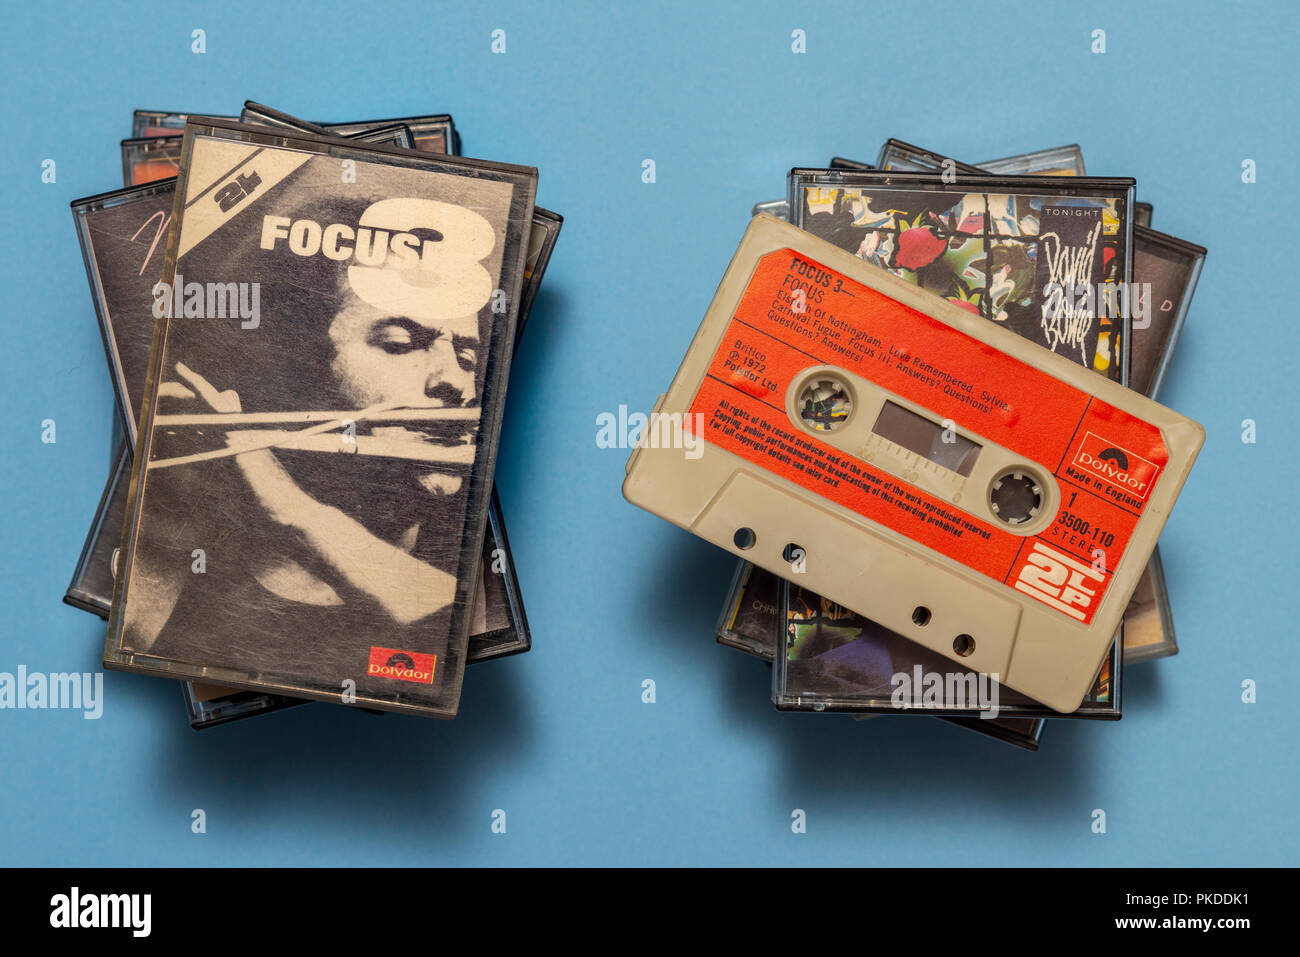 compact audio cassette of Focus, Focus 3 double album with art work. Stock Photo